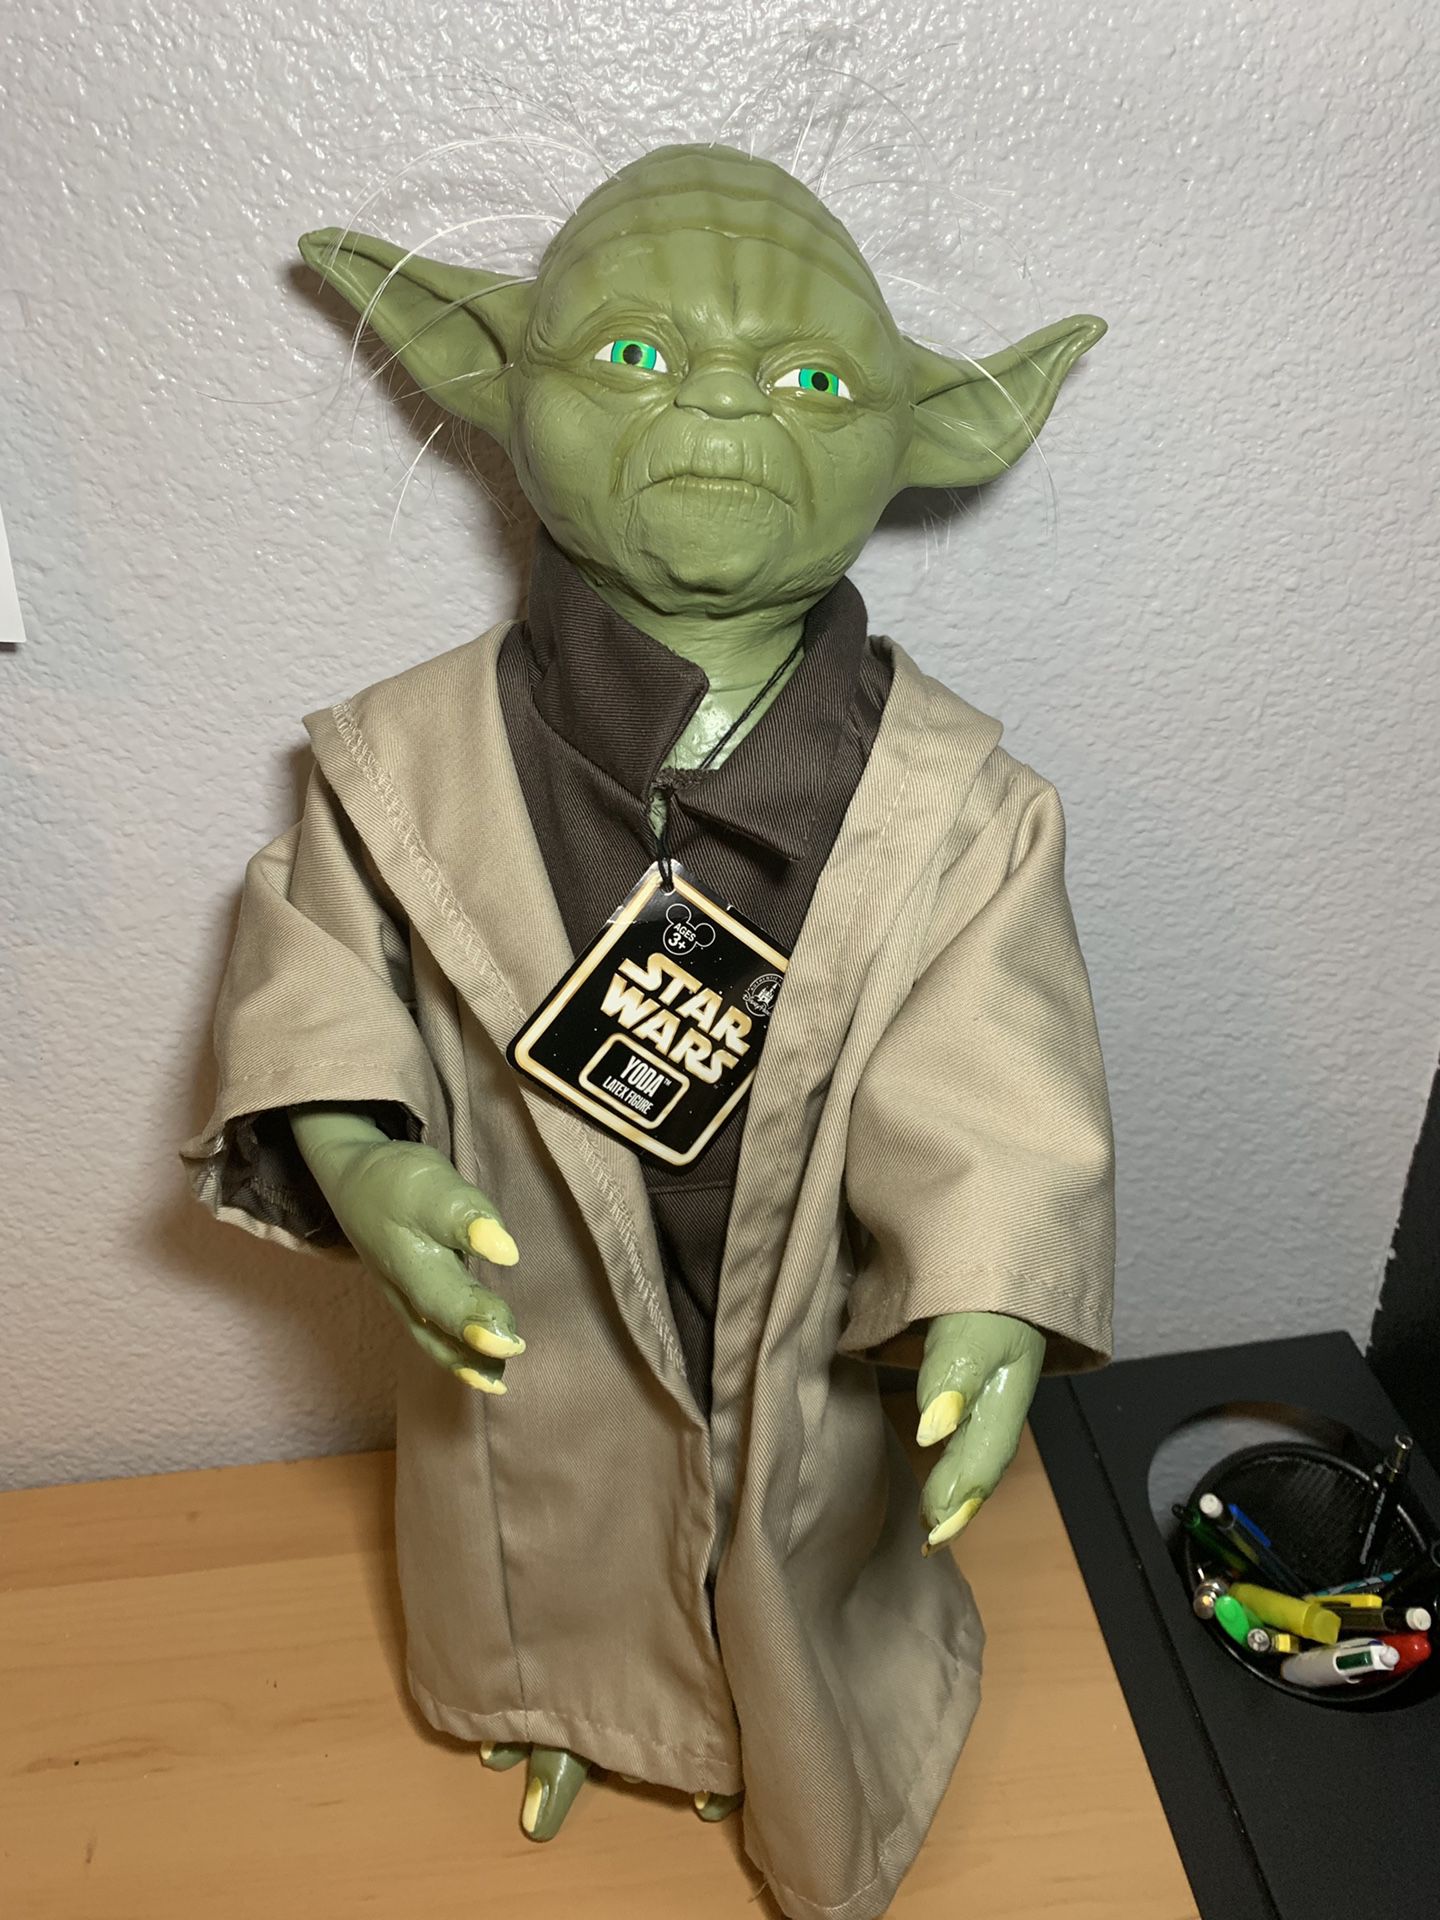 Latex Yoda figurine